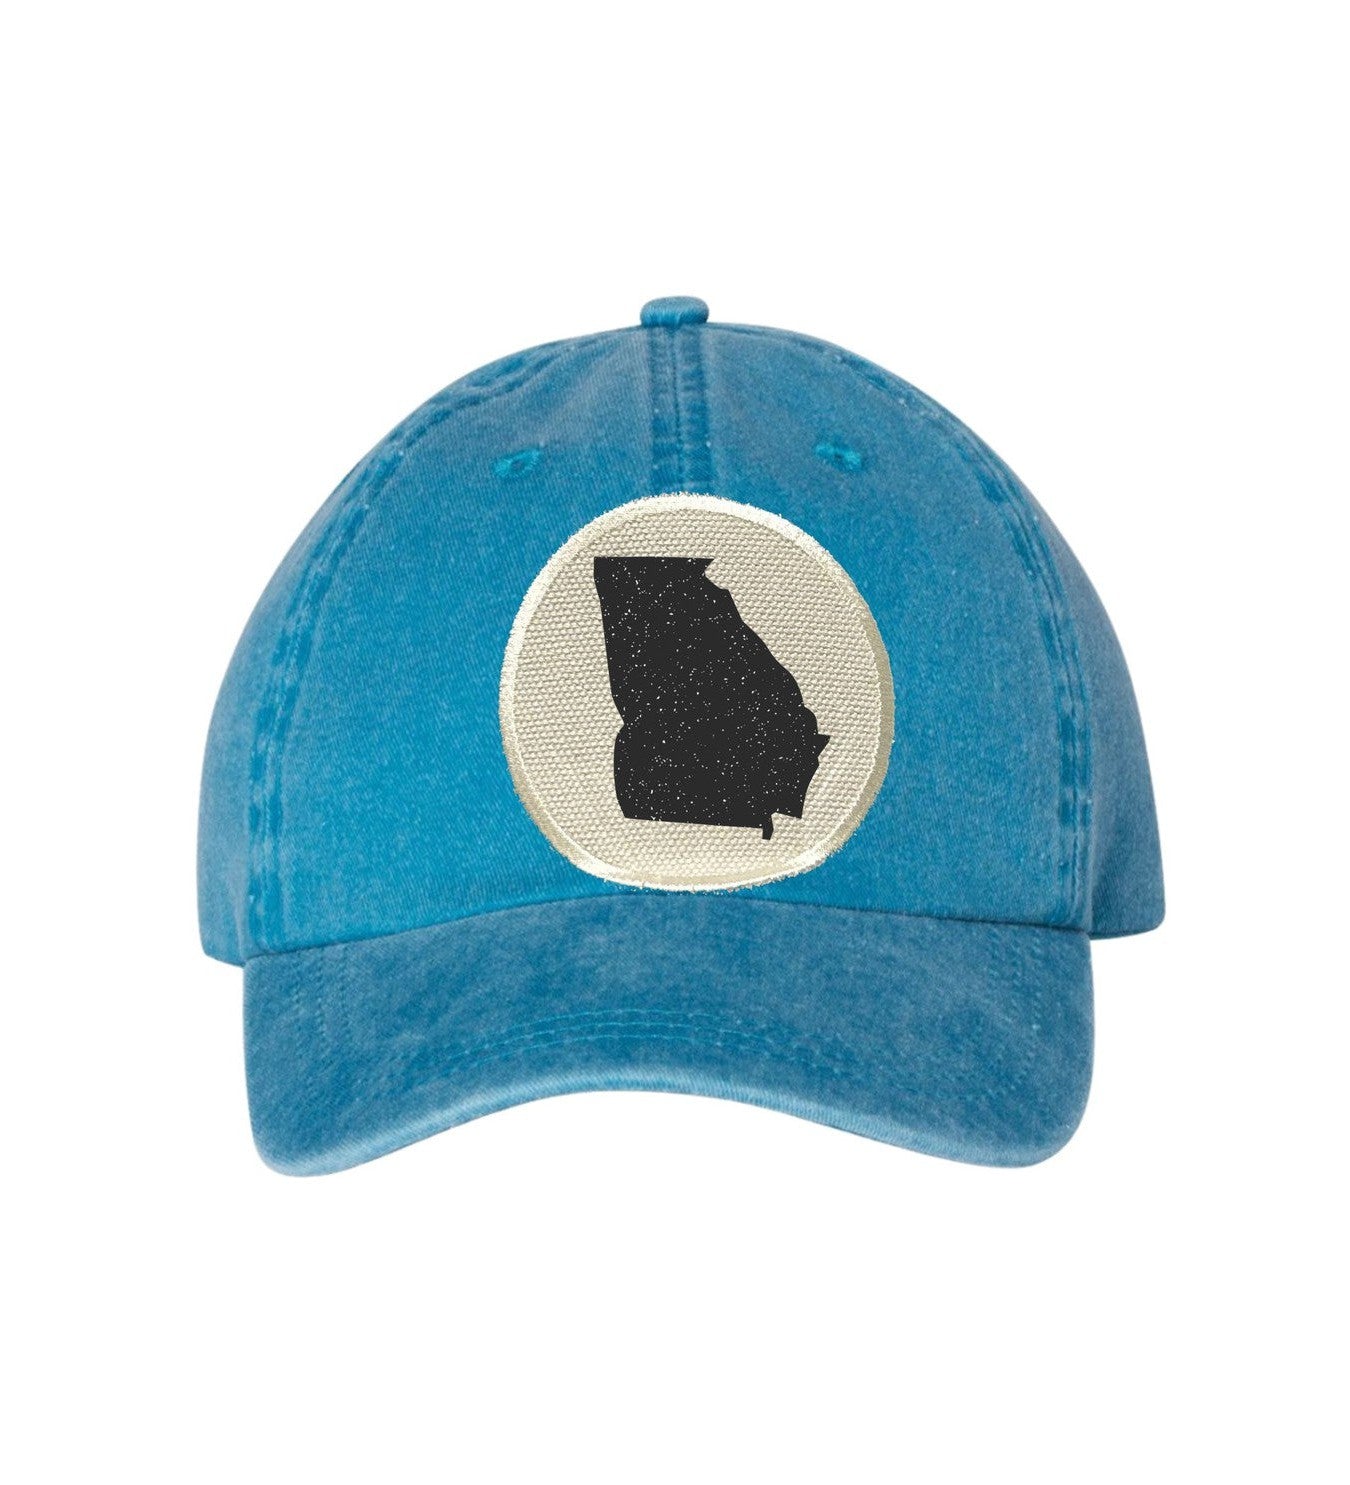 State Shape Ball Cap